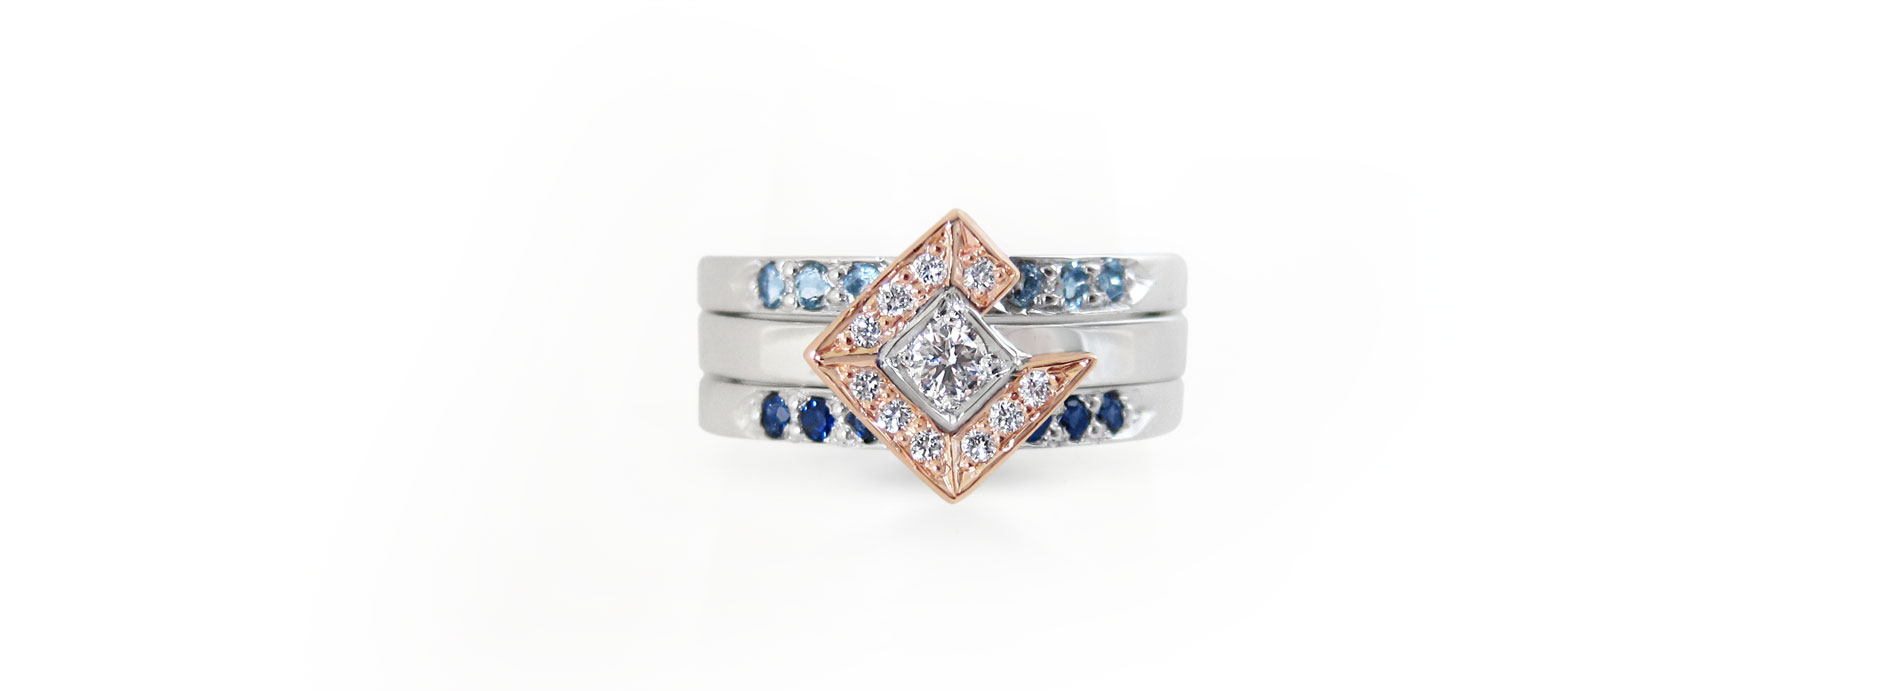 Rose gold, white gold, aquamarine, diamond and sapphire engagement ring set